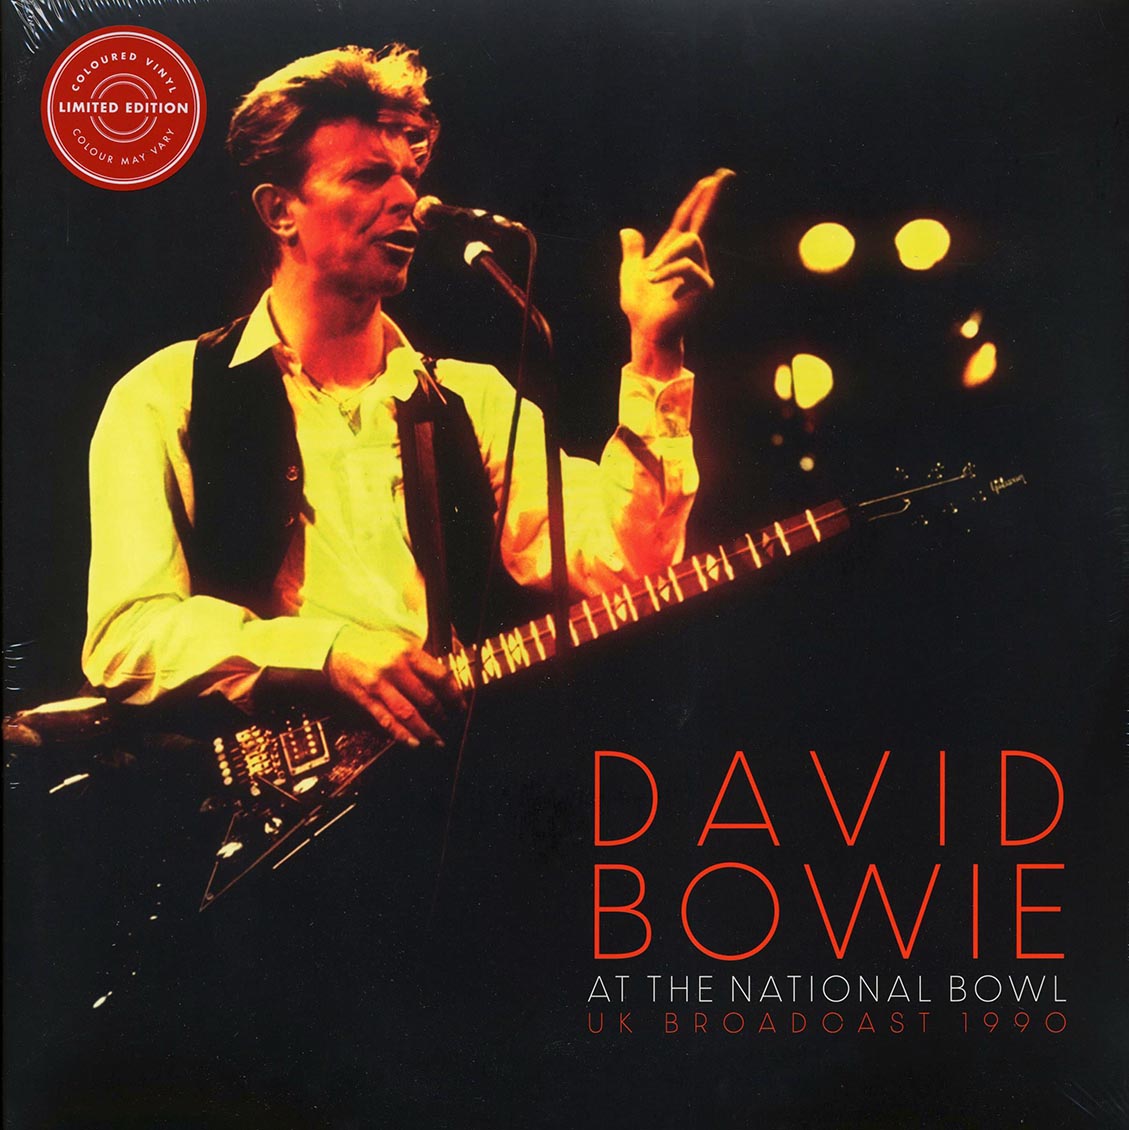 David Bowie - At The National Bowl UK Broadcast 1990: Milton Keynes, England, August 5th 1990 (ltd. ed.) (2xLP) (white vinyl) - Vinyl LP